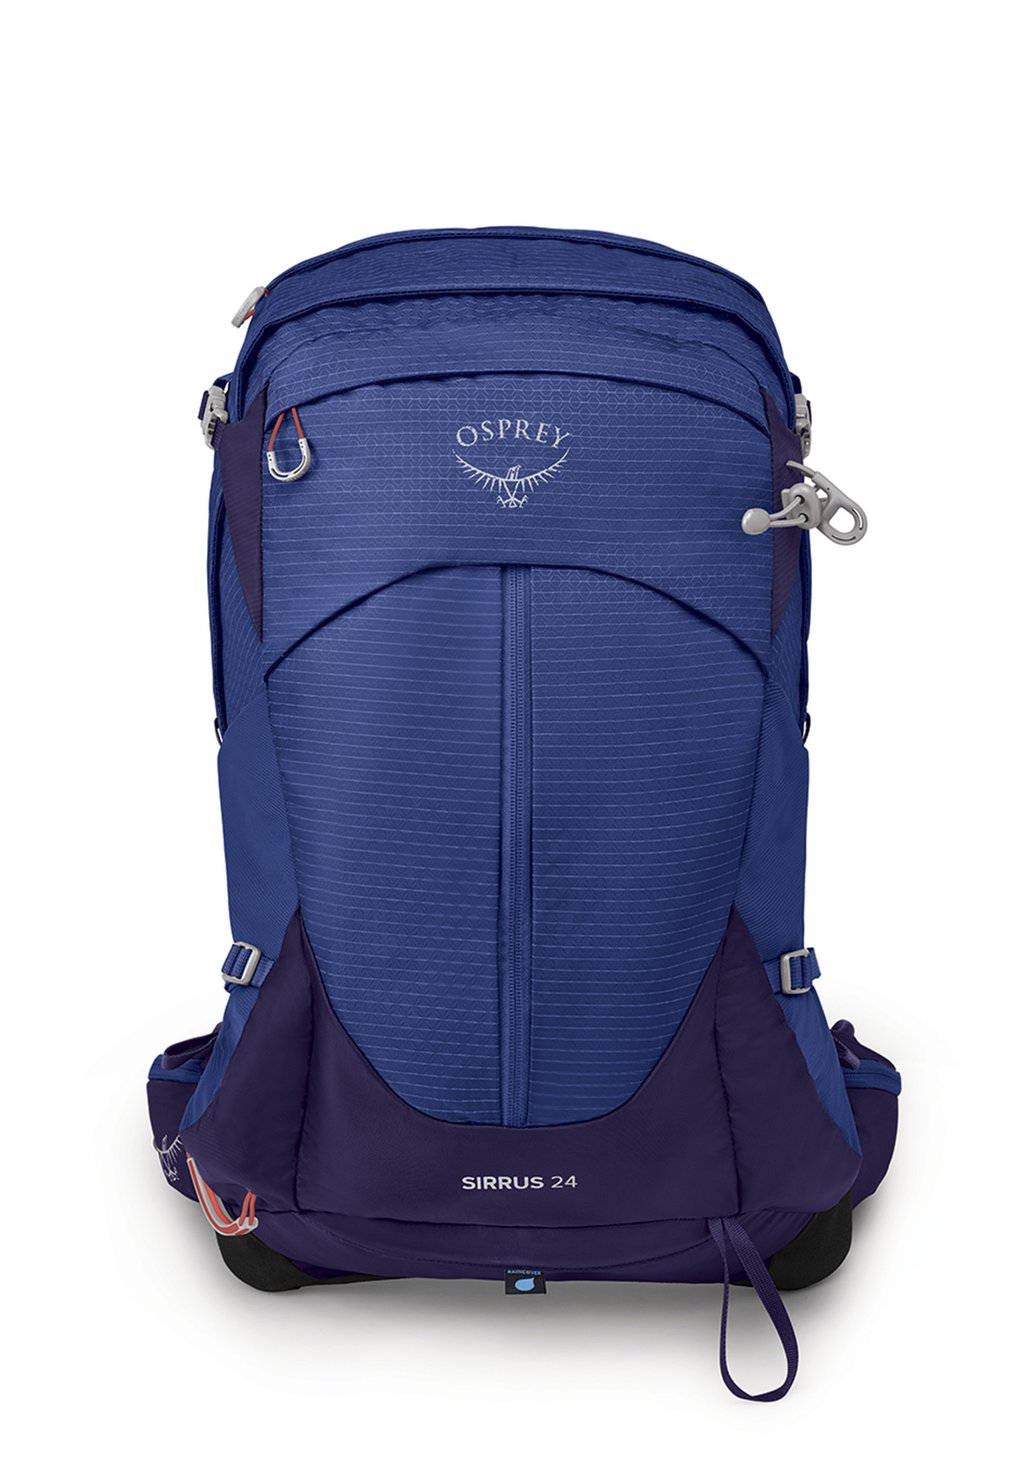 Туристический рюкзак SIRRUS Osprey, цвет blueberry туристический рюкзак sirrus osprey цвет muted space blue